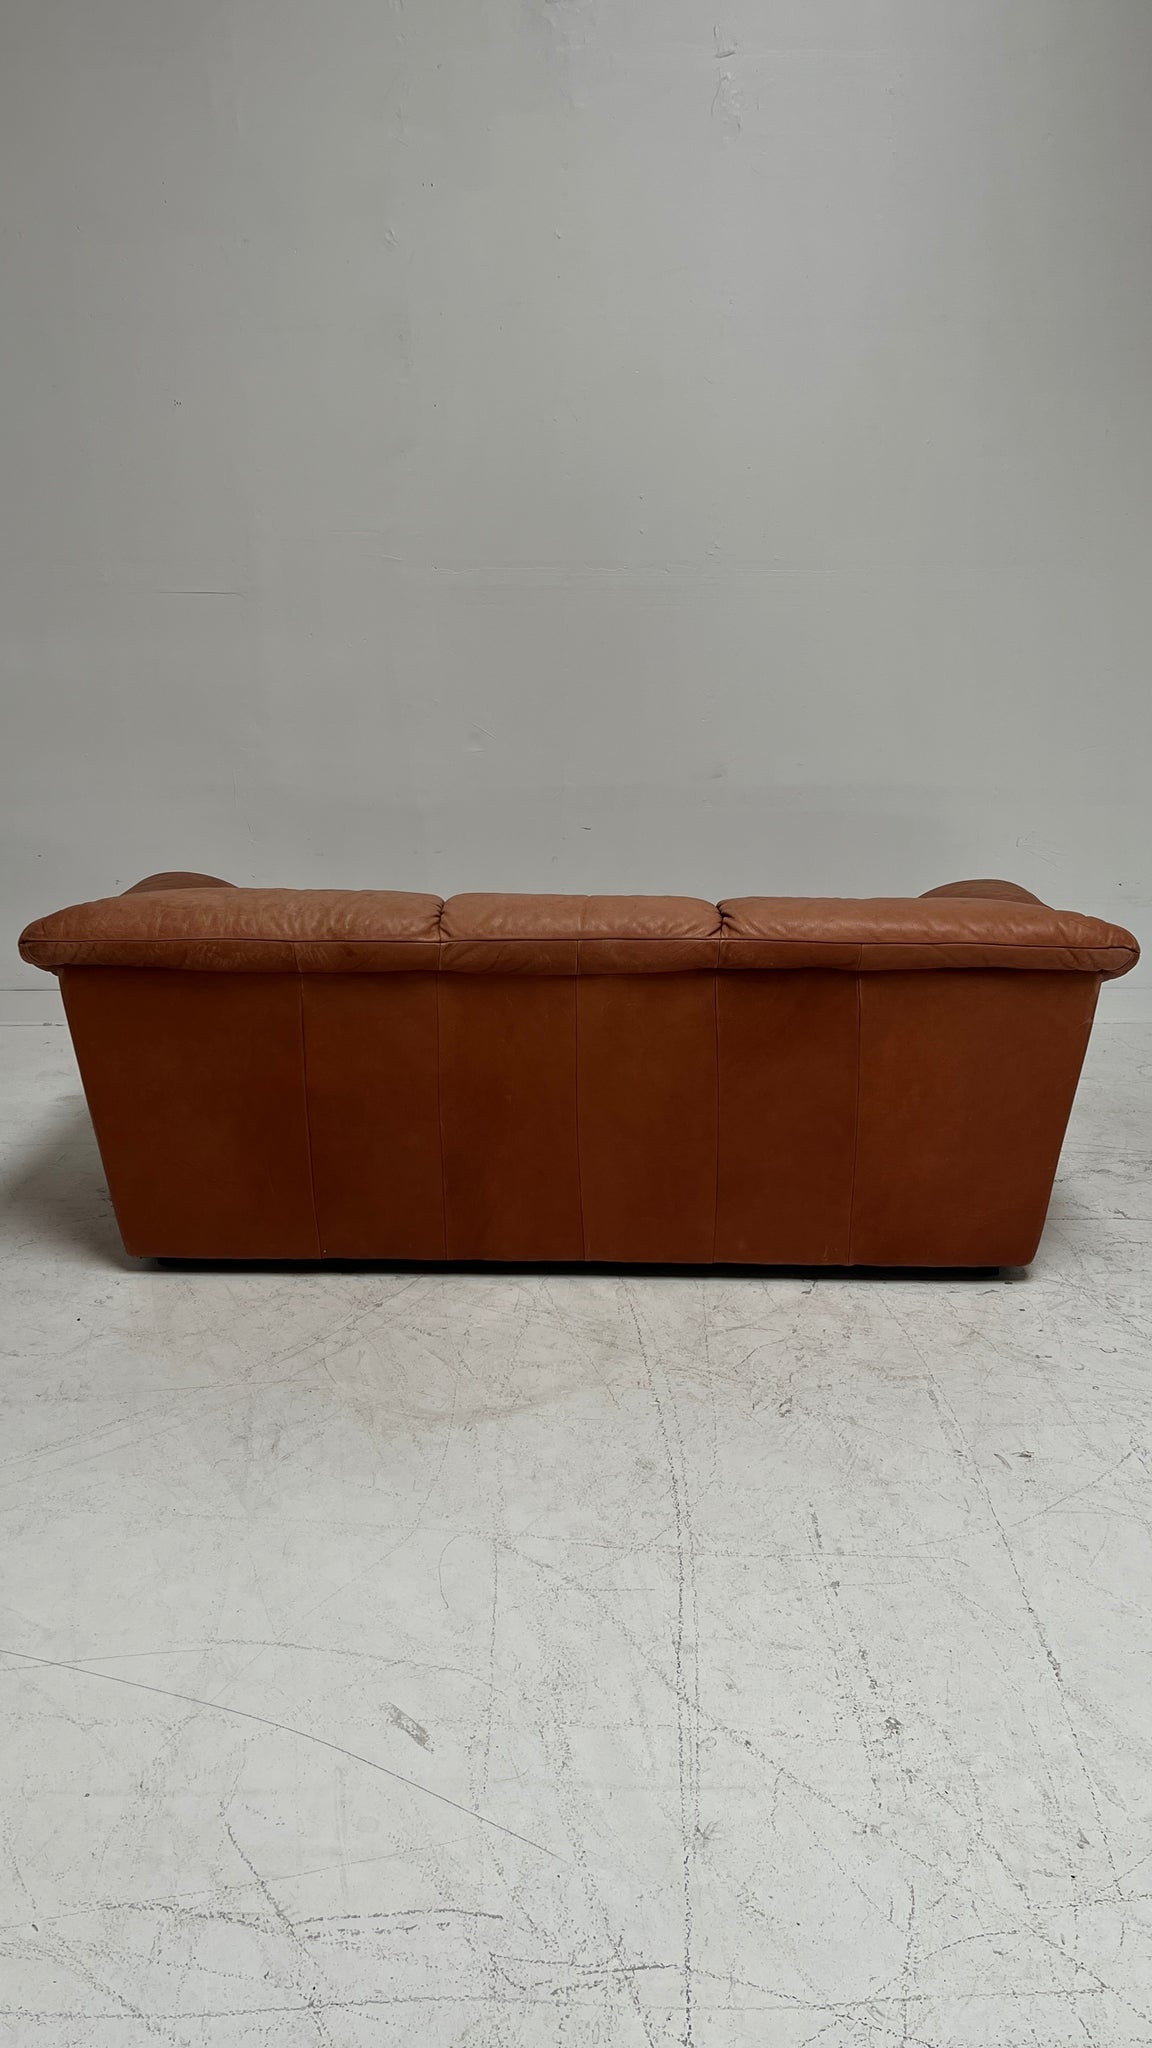 1970s Italian Leather Sofa by Natuzzi